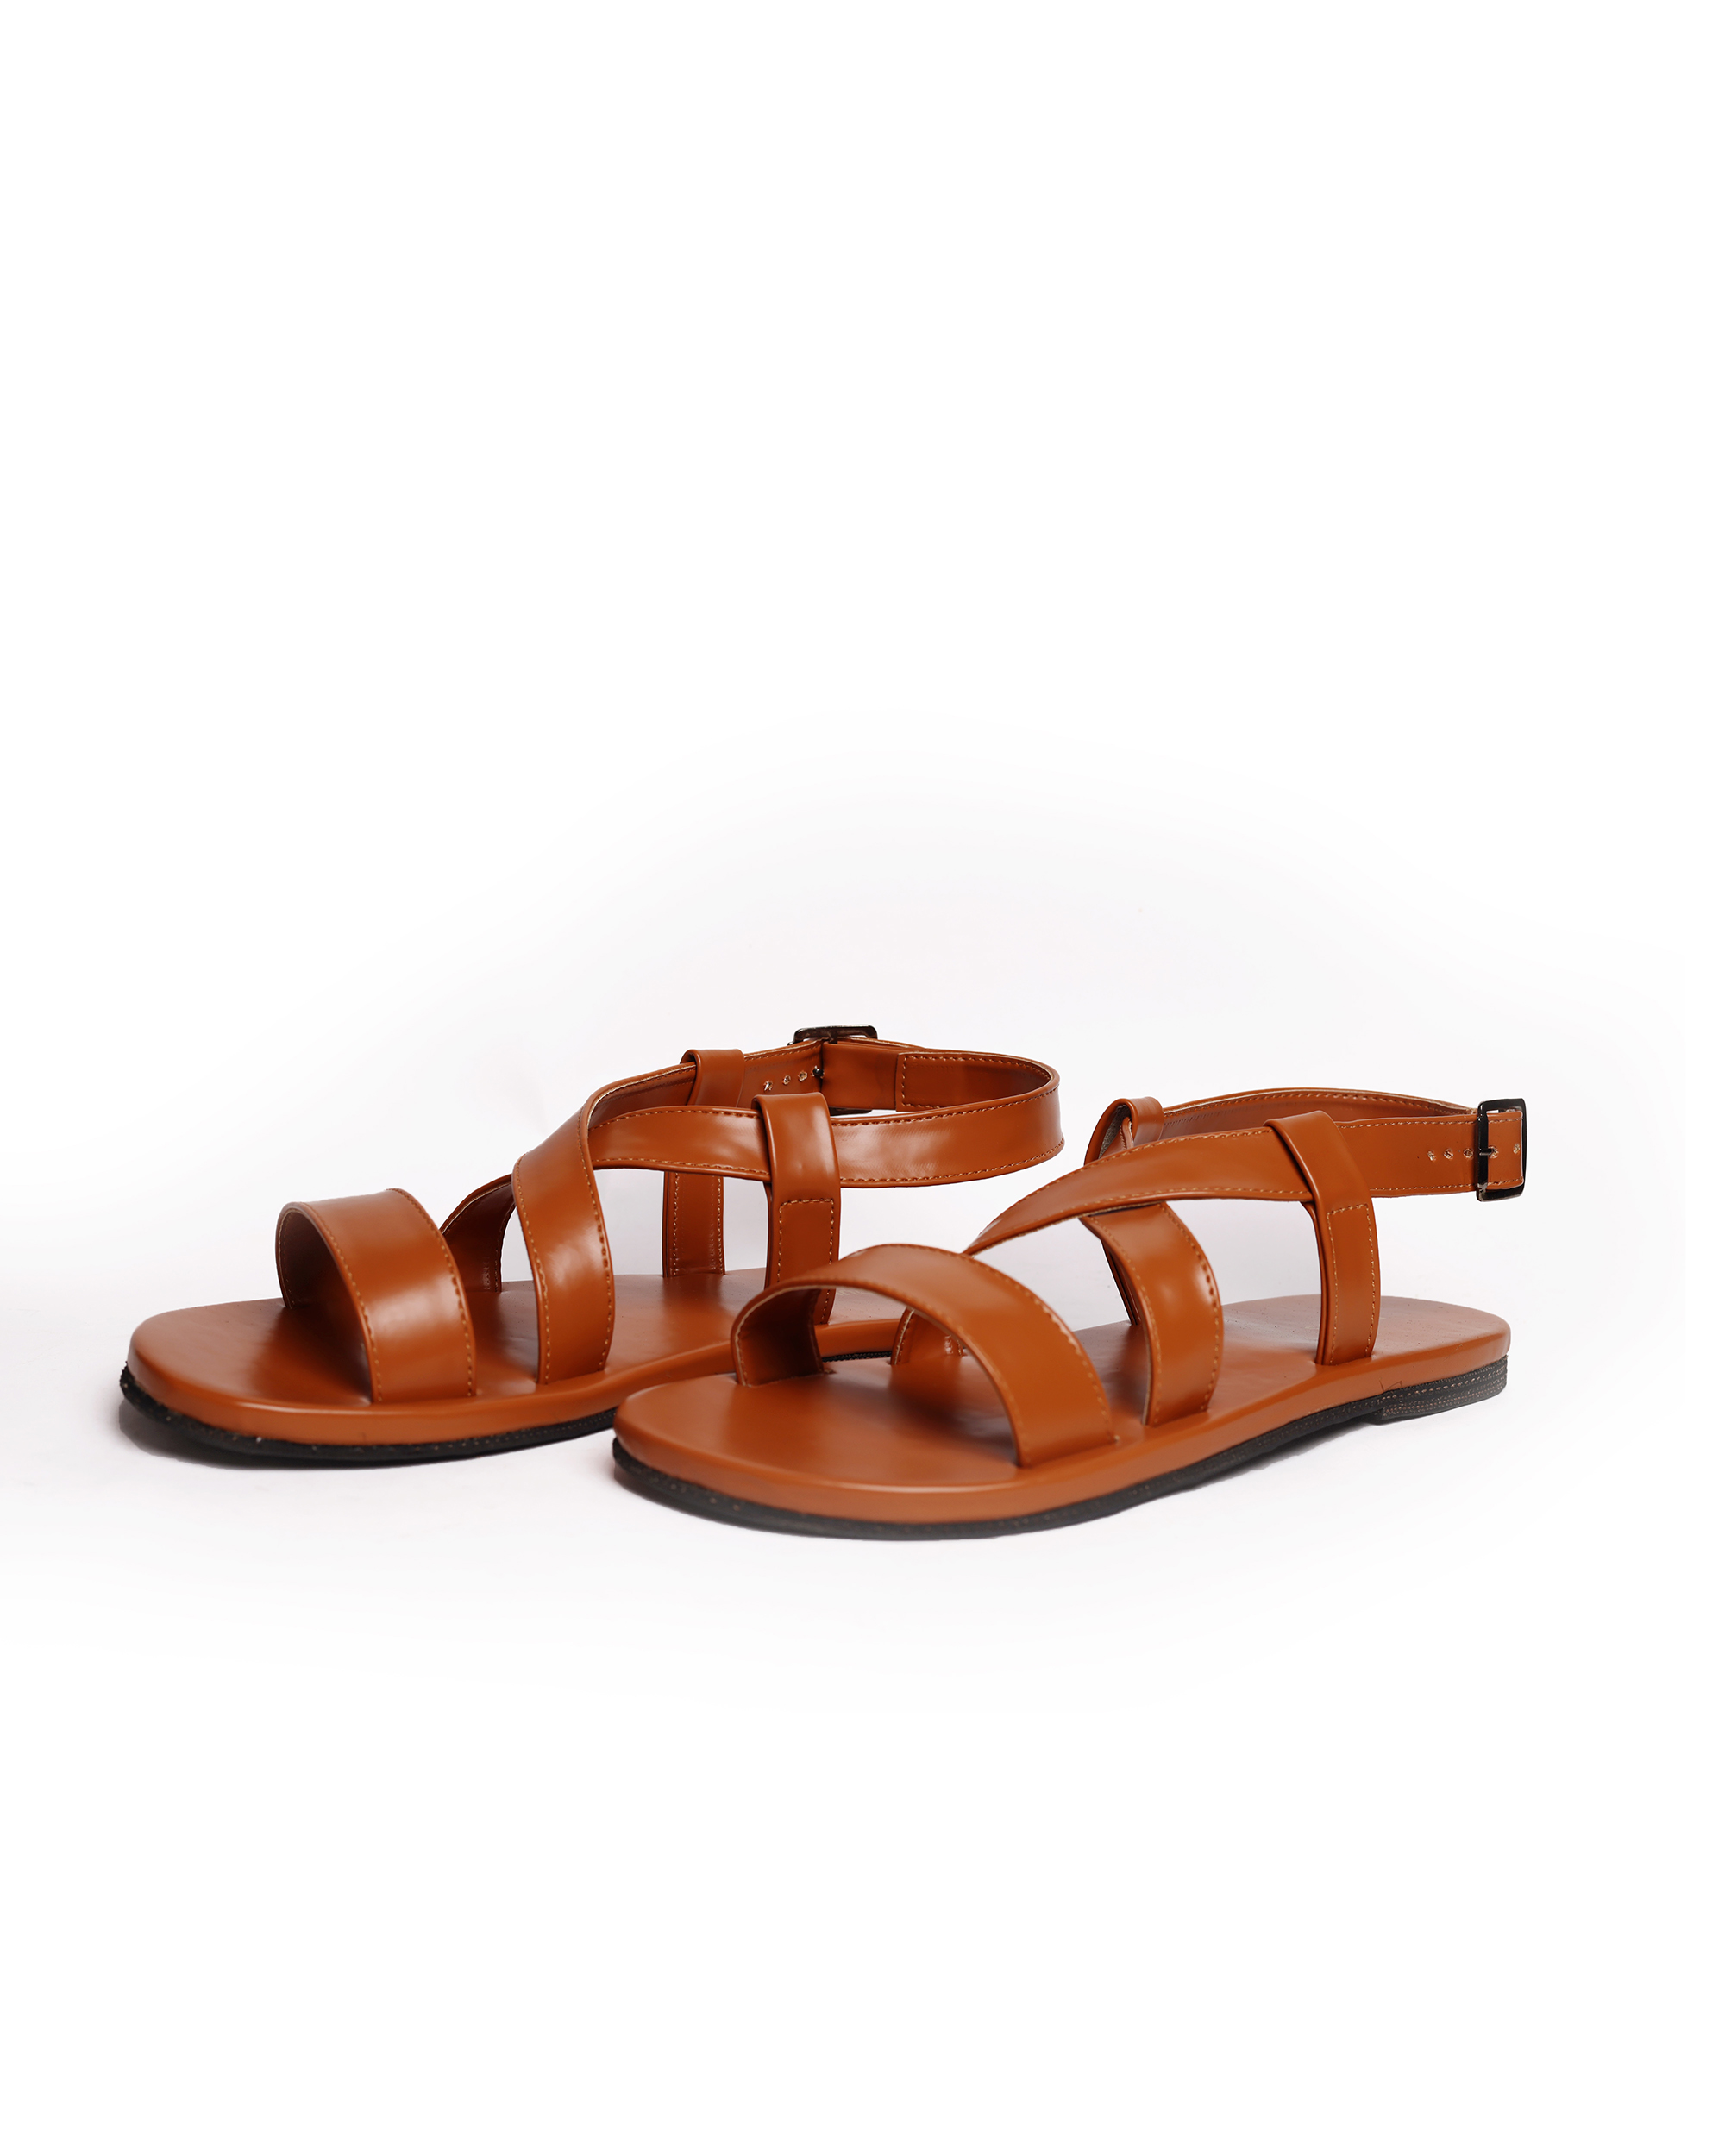 Paaduks Calor Tan Sandals For Men - Orgo All-Natural